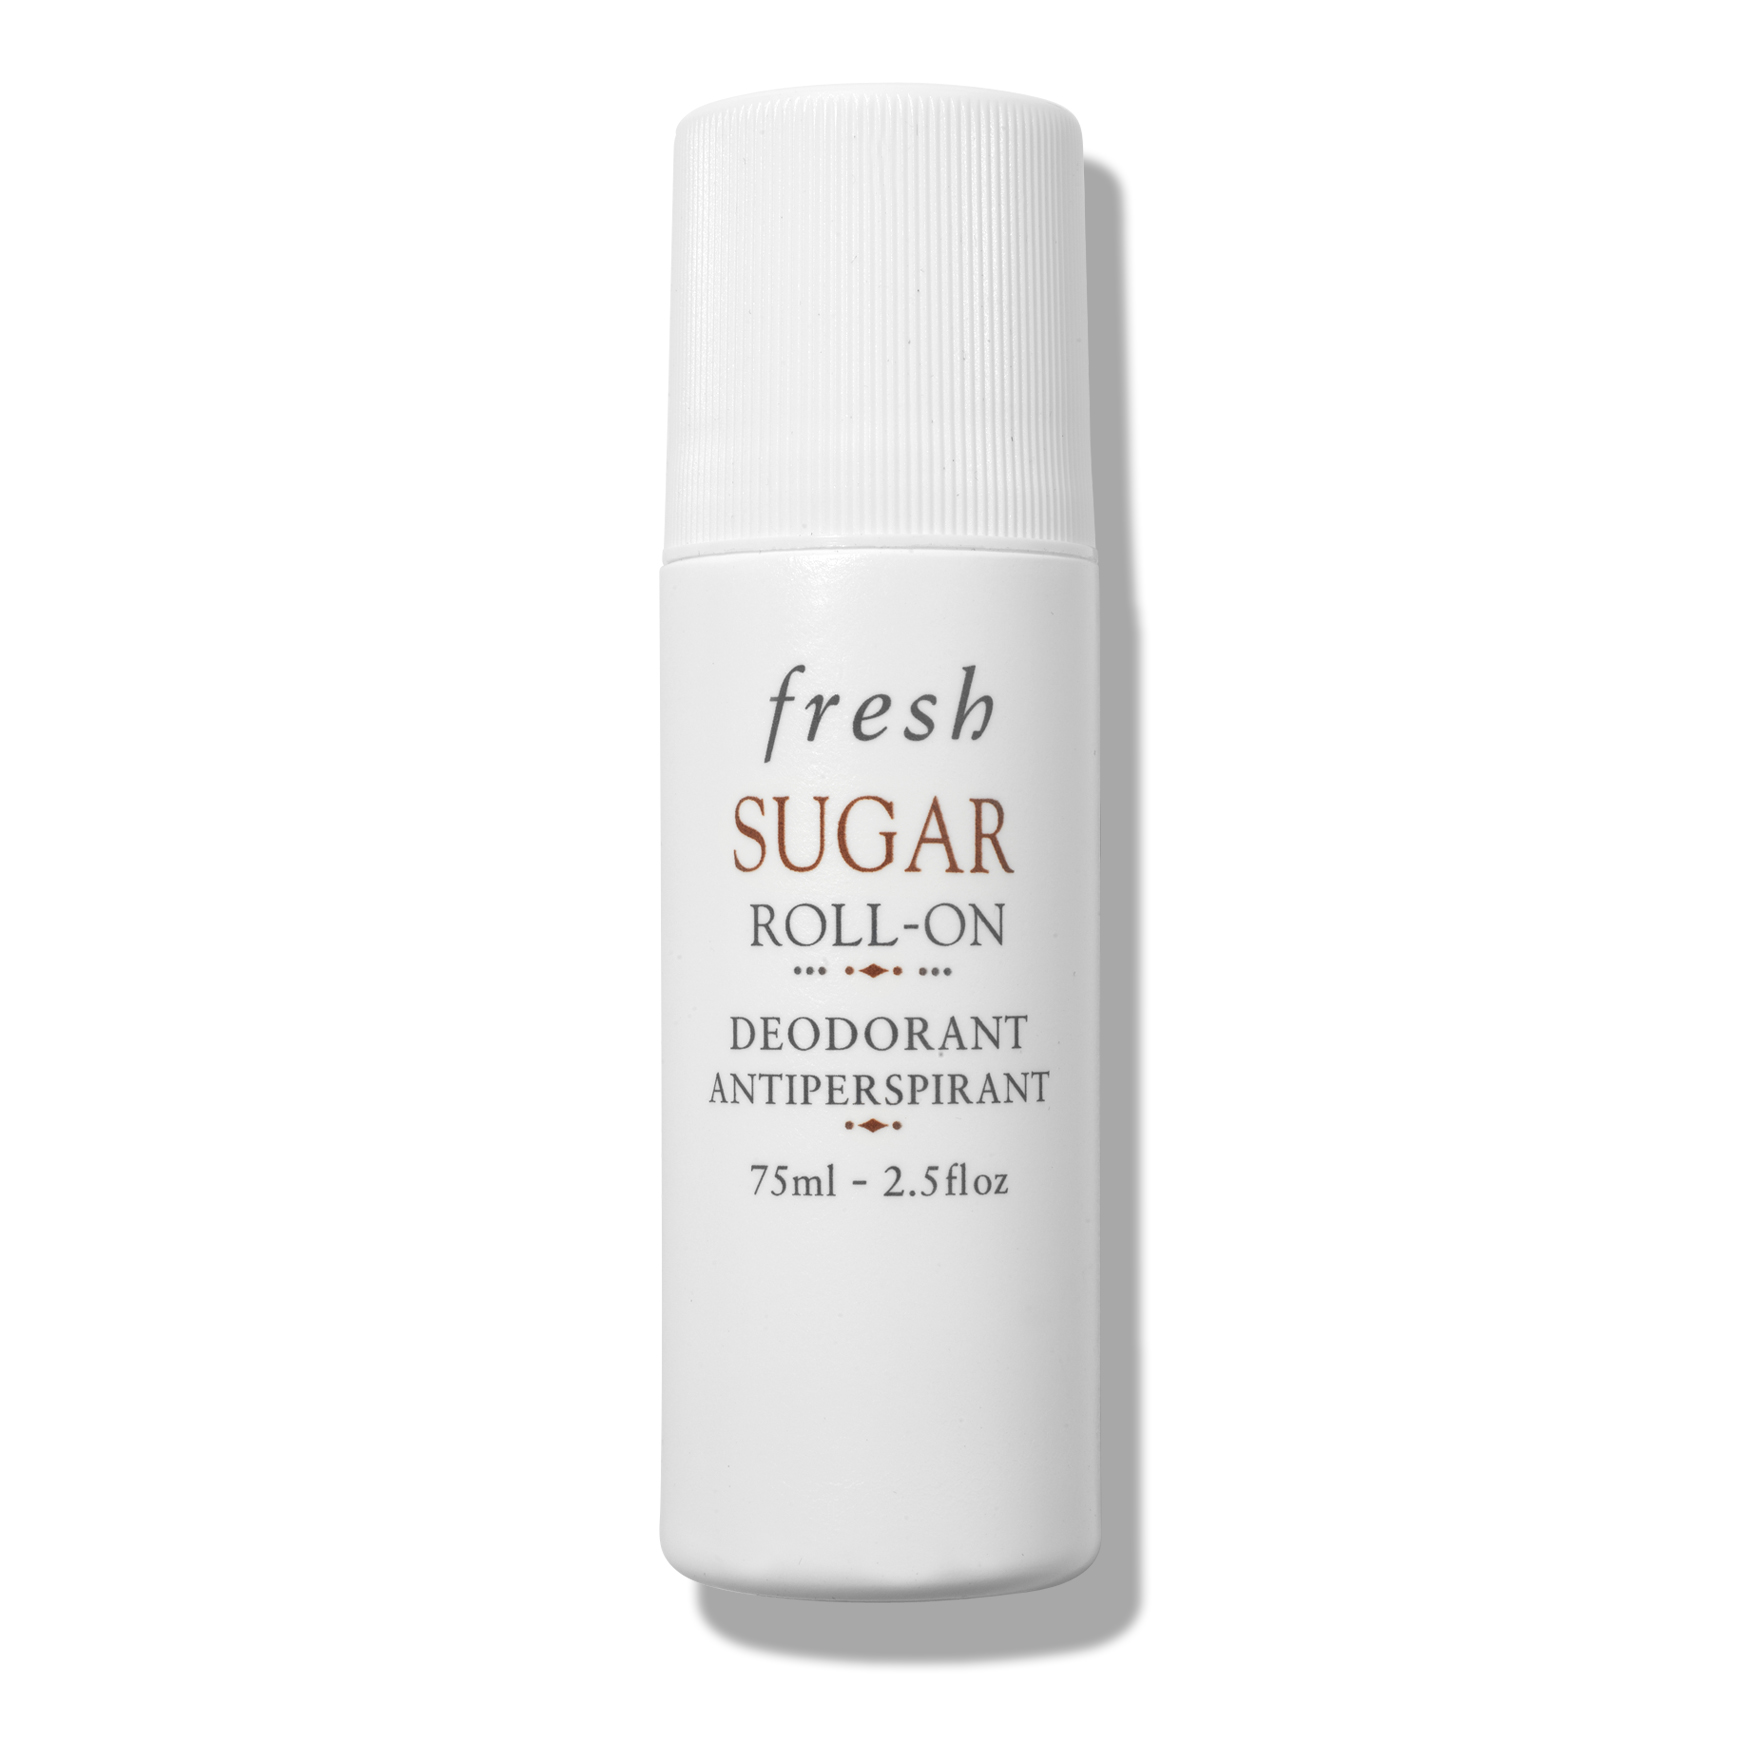 Fresh Sugar Roll-on Deodorant Antiperspirant | Space NK